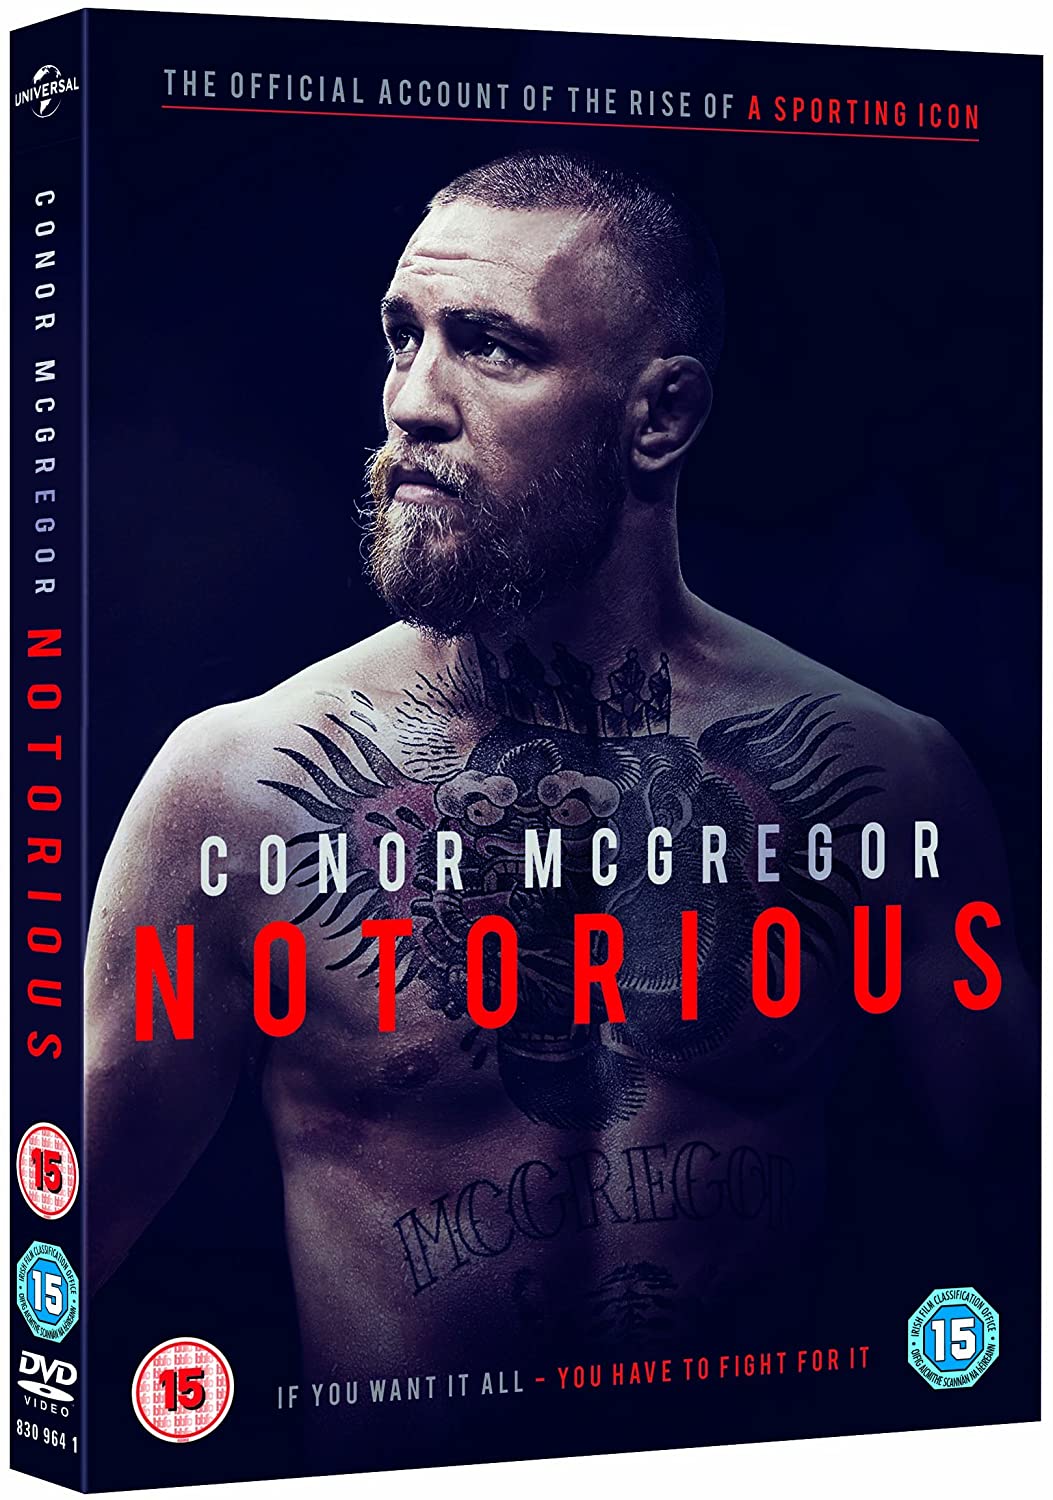 Conor McGregor - Notorious (Official Film) [2017] [2016] - Documentary/Sport [DVD]